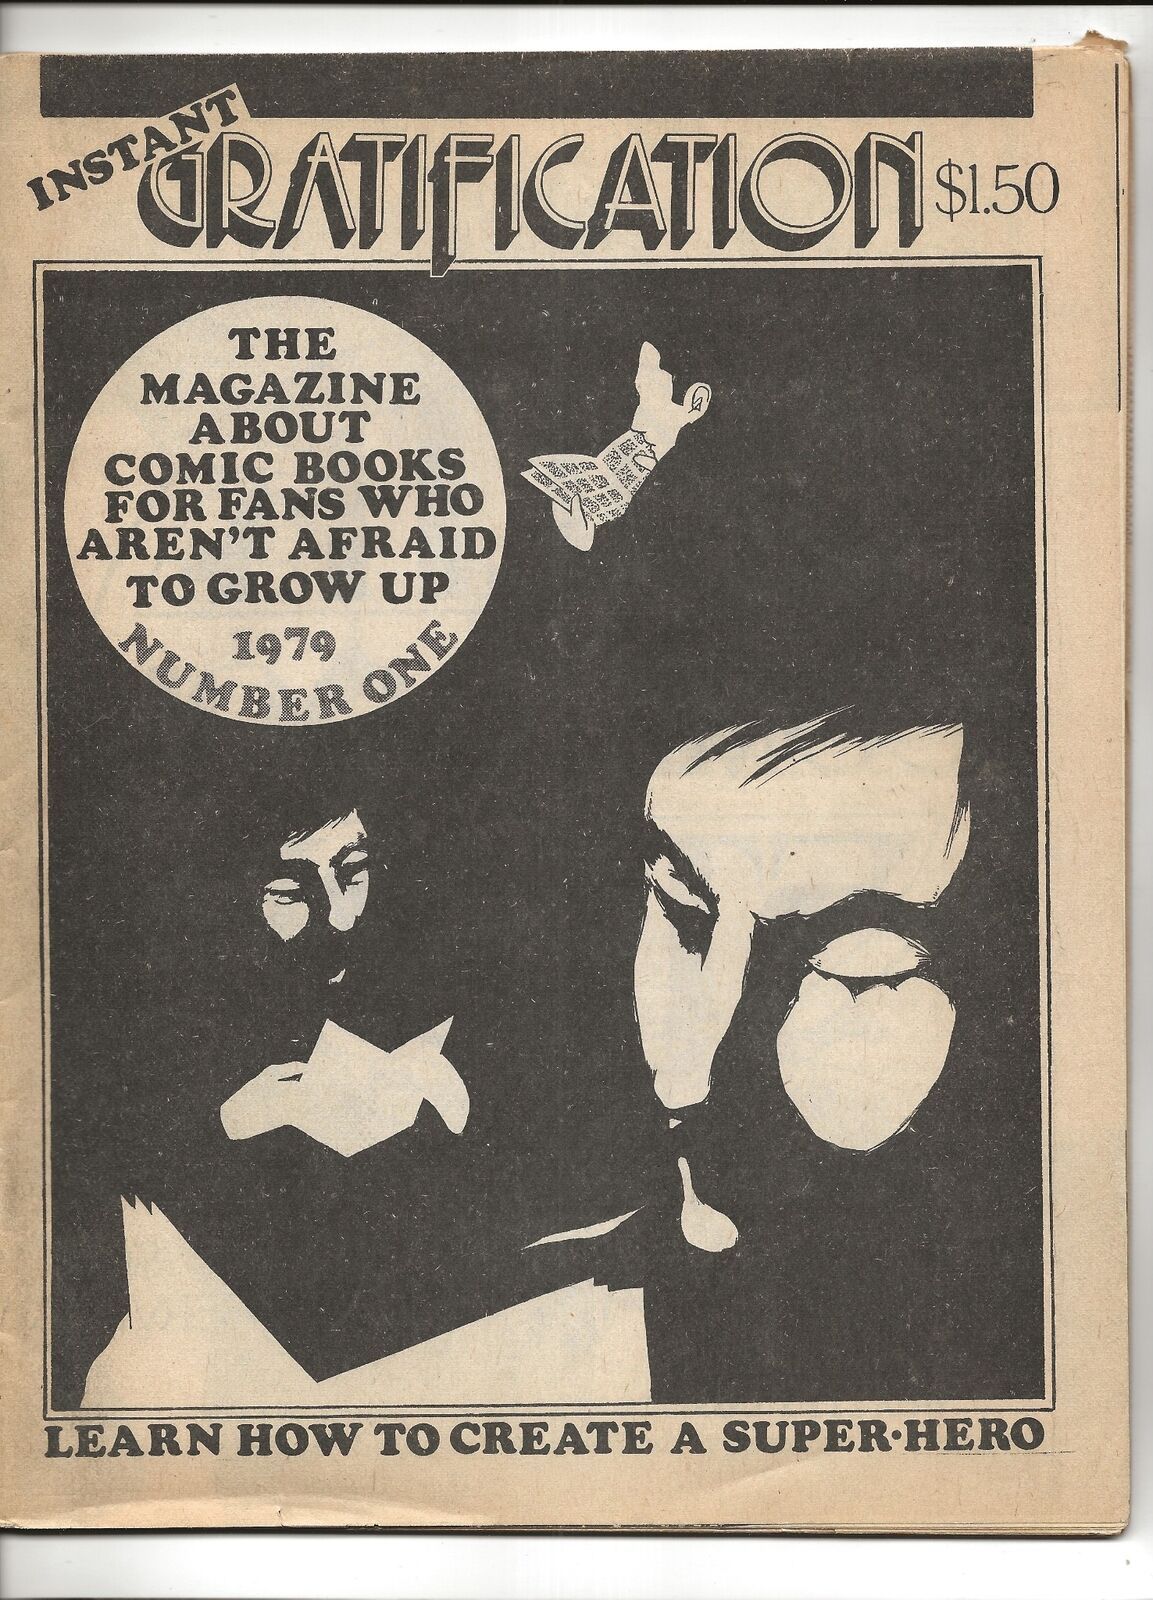 1979 Vol 1 Street Press Underground Magazine Grown-up Comic books